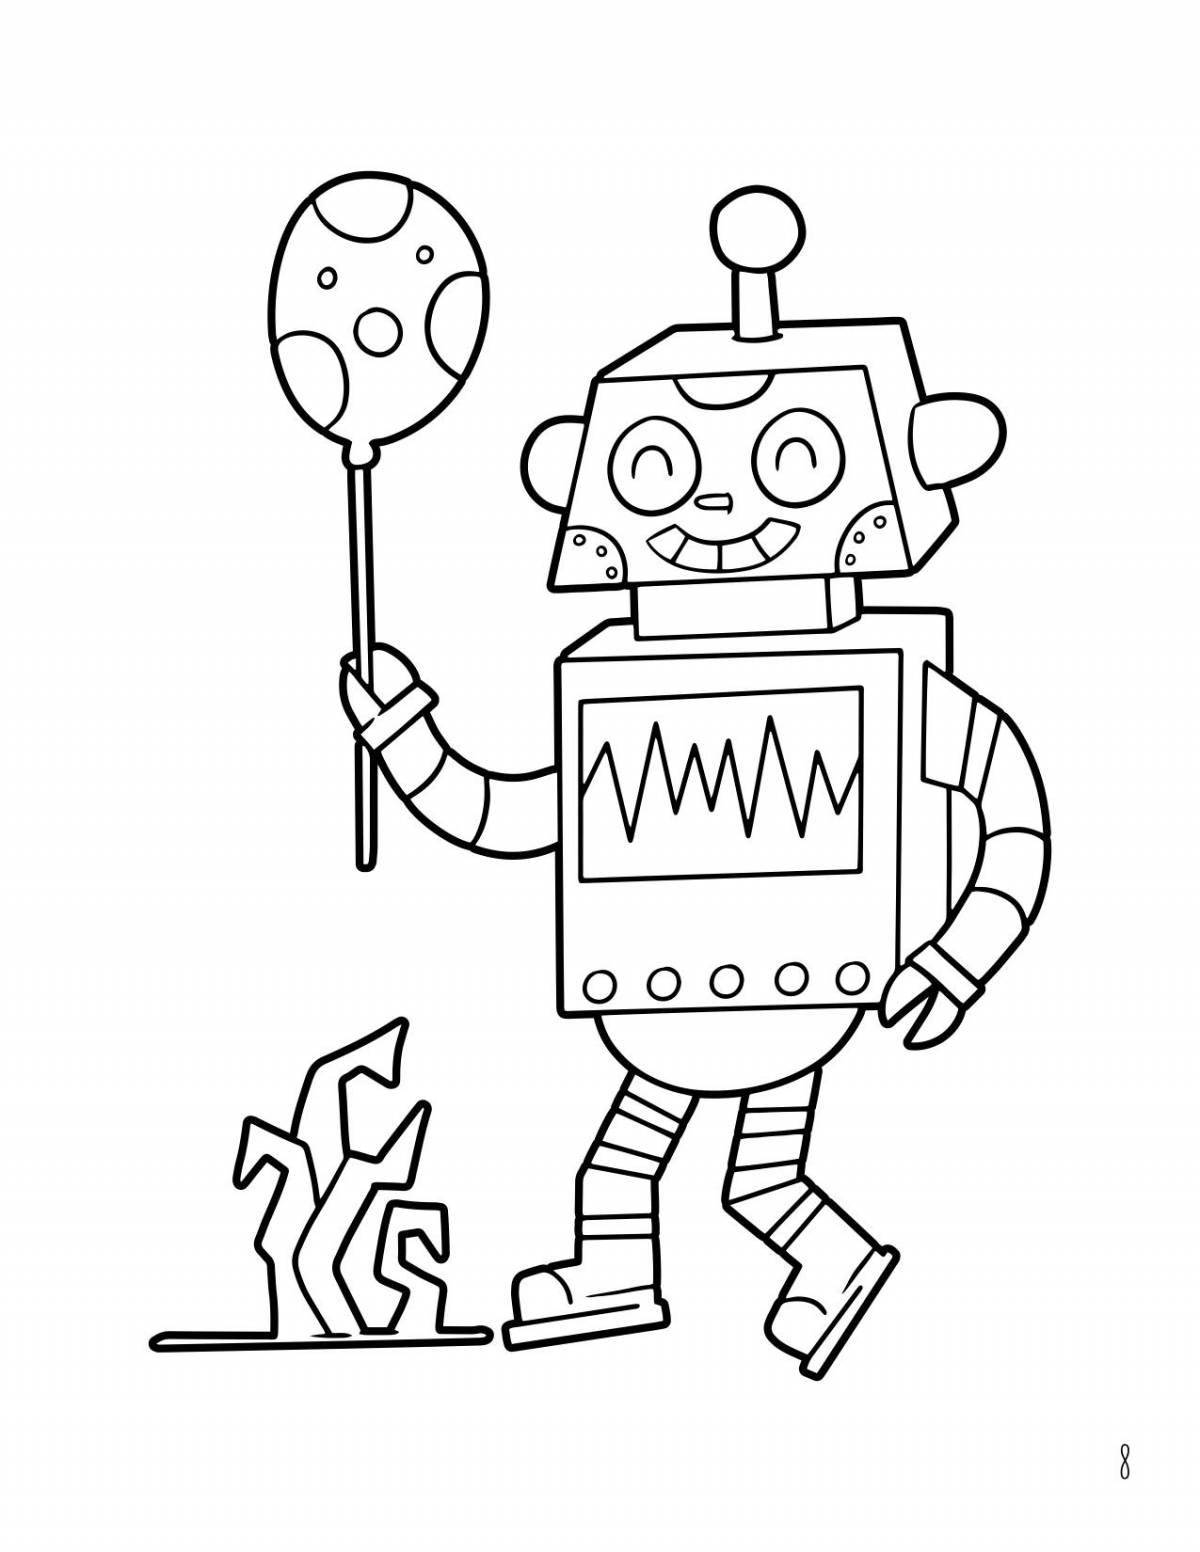 Inspiring robot teacher coloring page